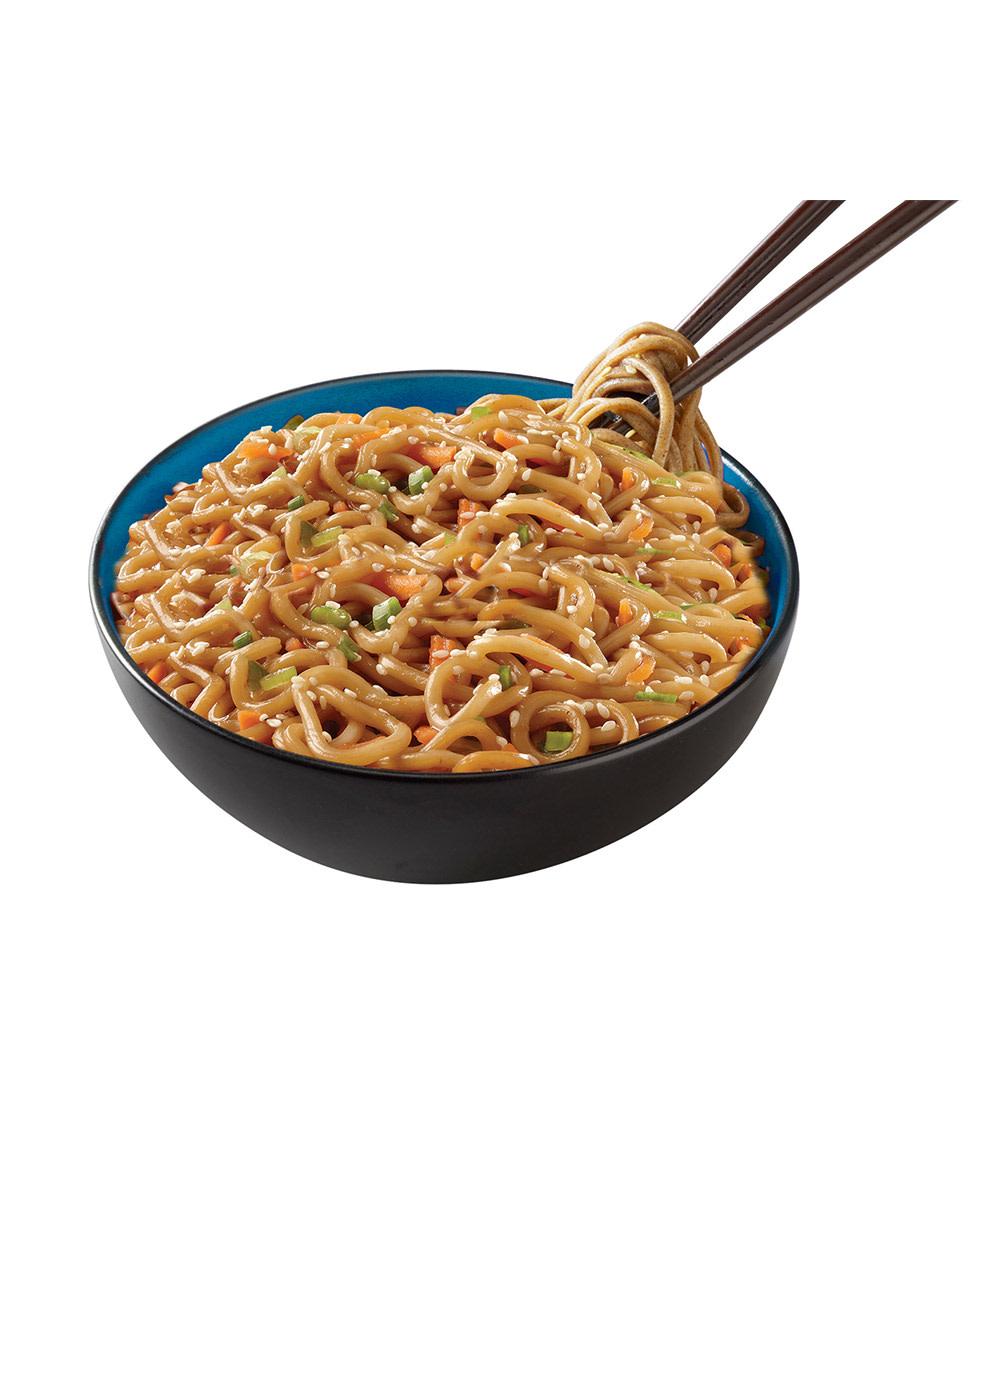 Simply Asia Sesame Teriyaki Noodle Bowl; image 6 of 7